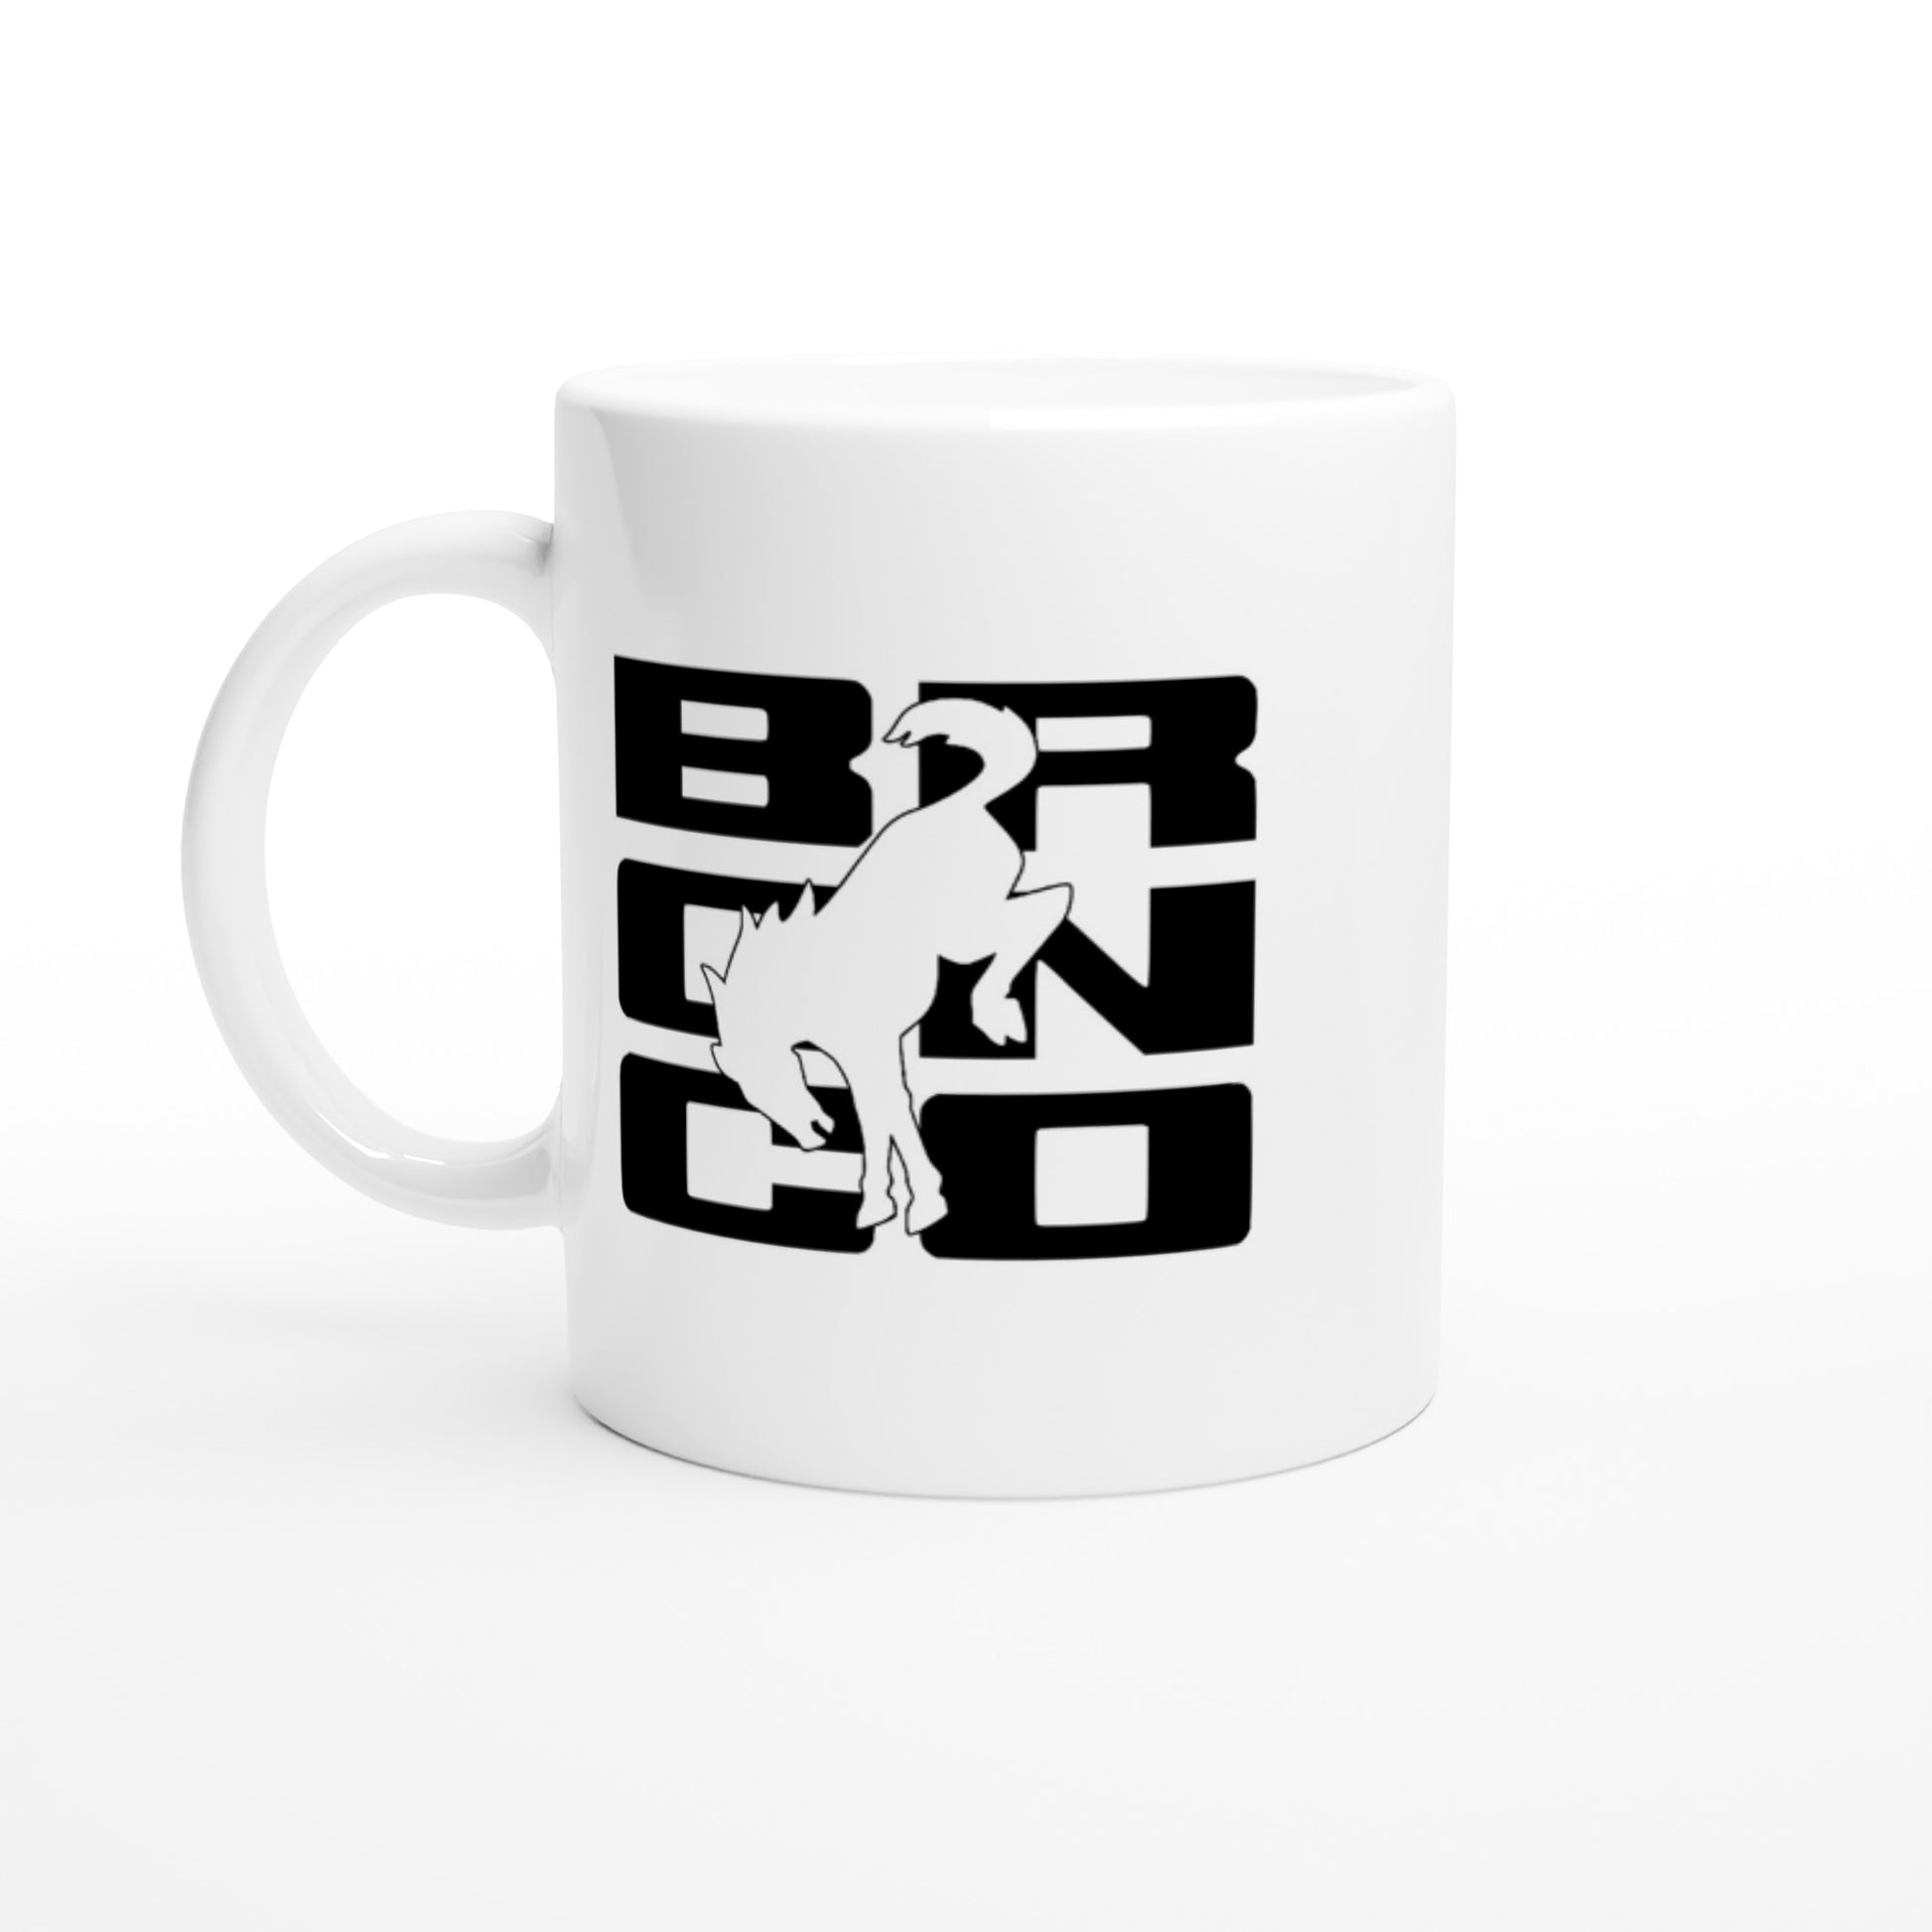 Bronco - White 11oz Ceramic Mug - Mister Snarky's